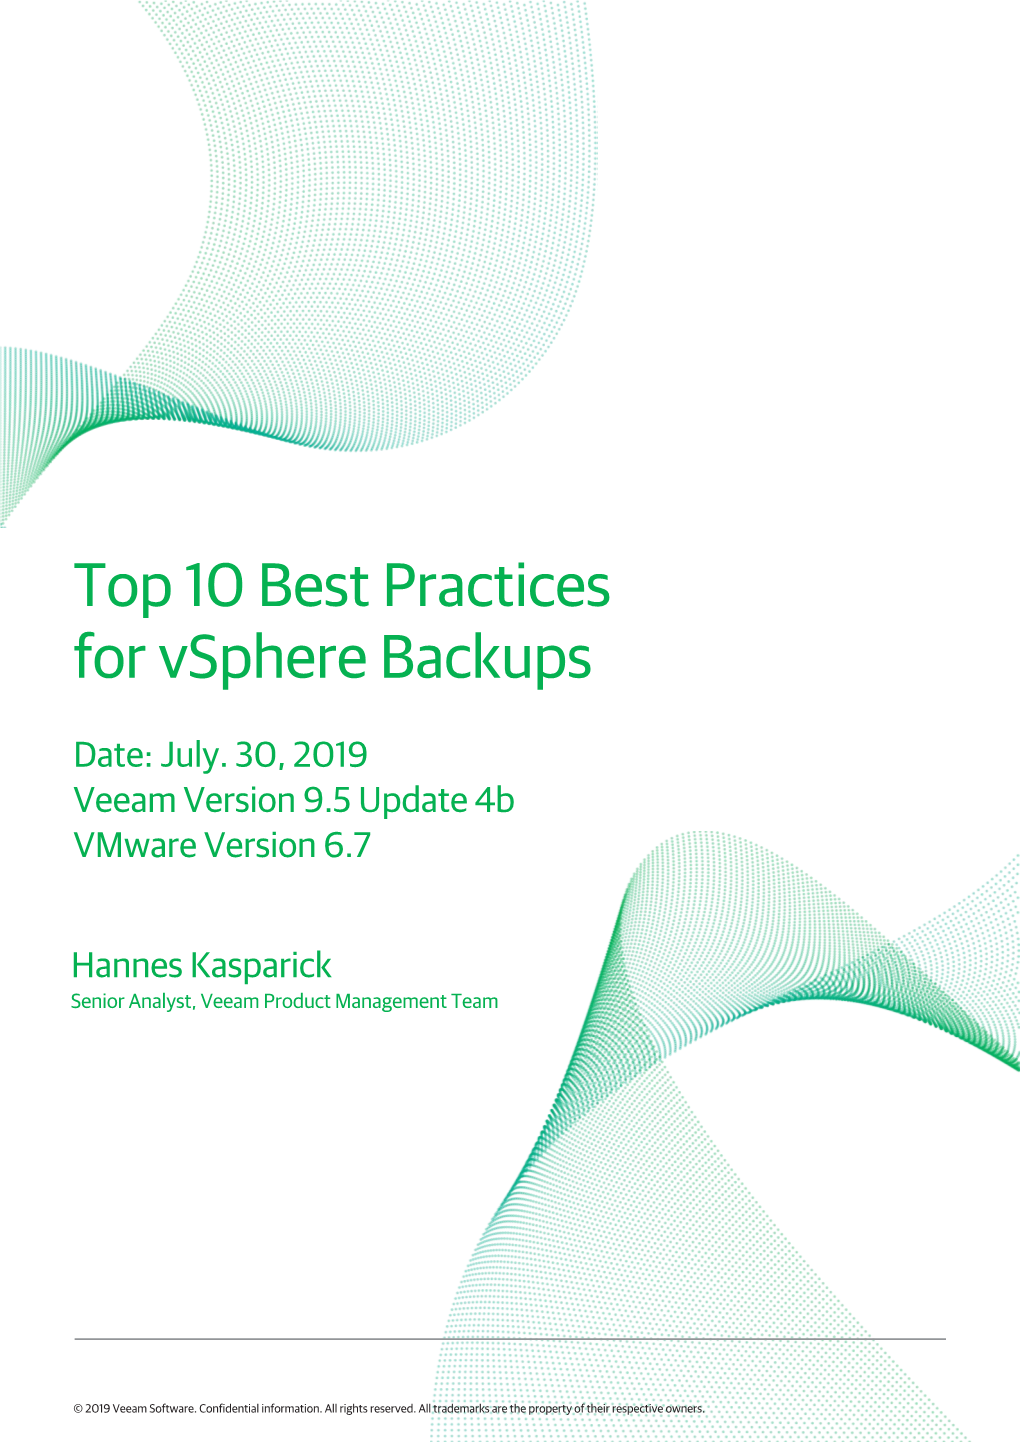 Top 10 Best Practices for Vsphere Backups